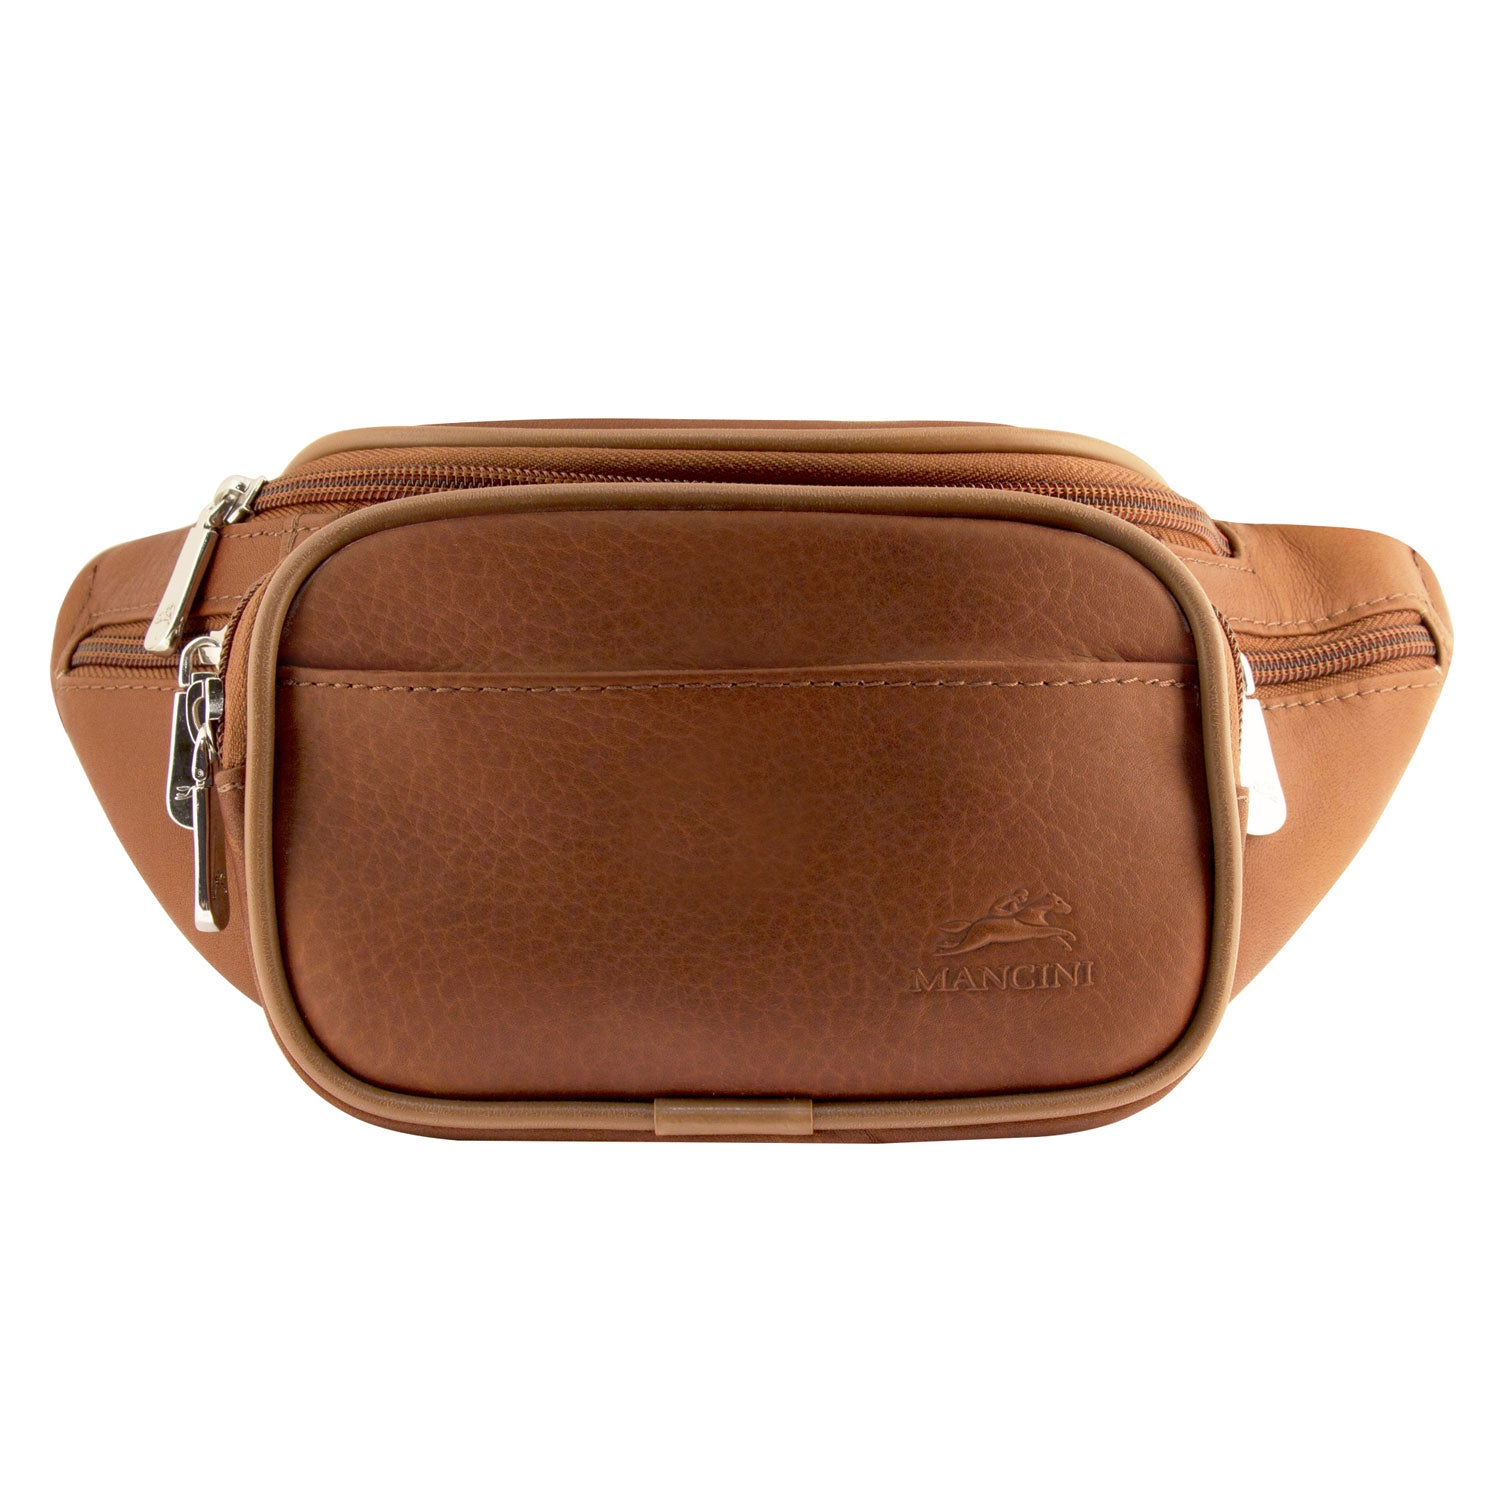 Mancini Leather Classic Waist Bag, 12" x 4" x 5.5", Cognac